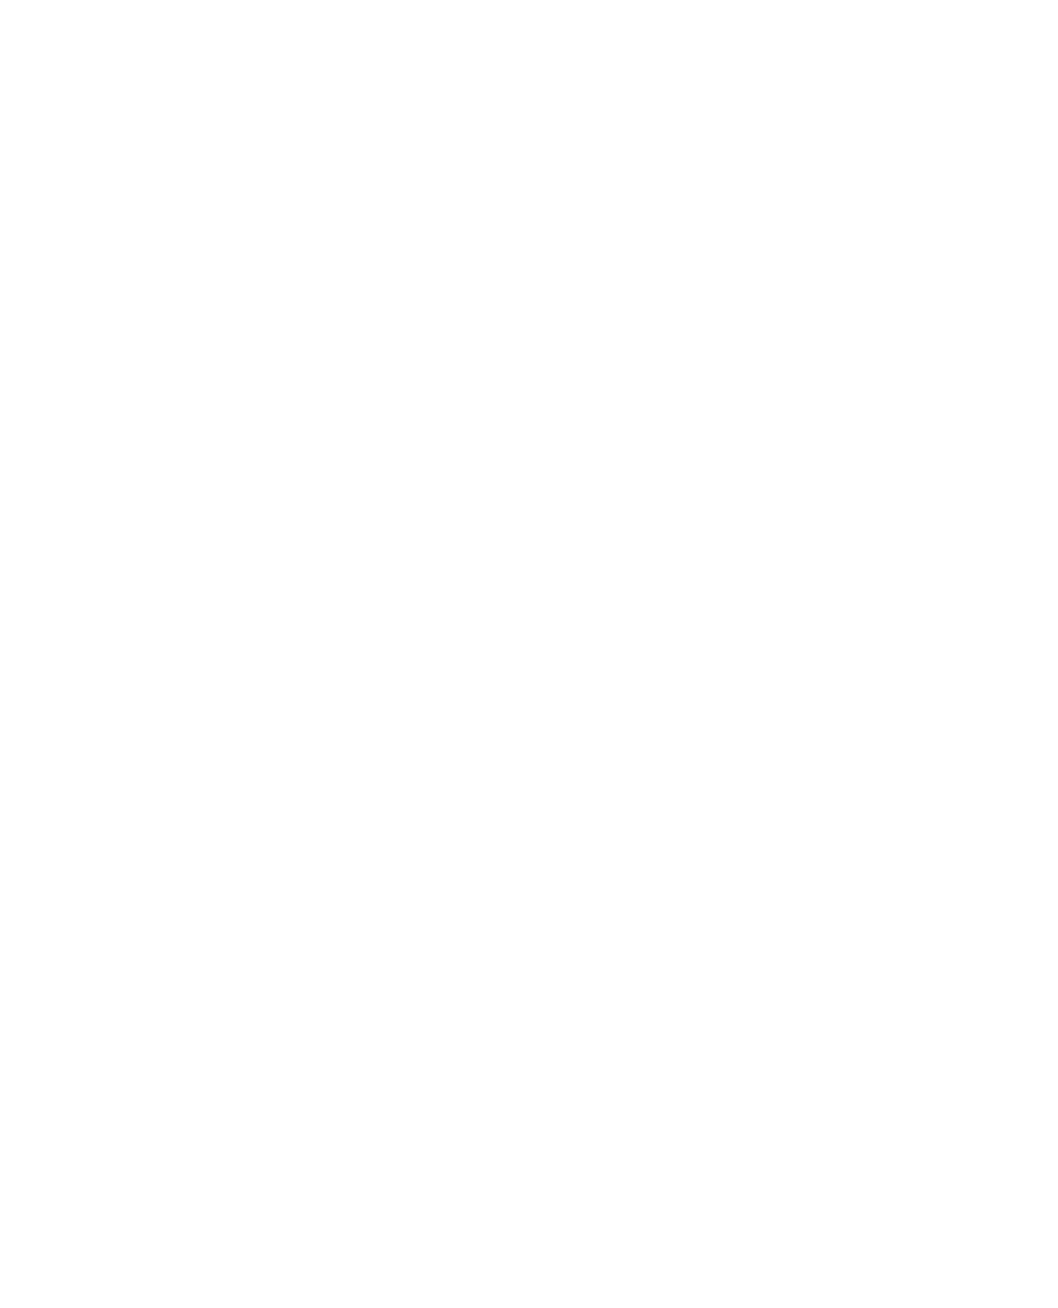 The New Black Film Collective logo